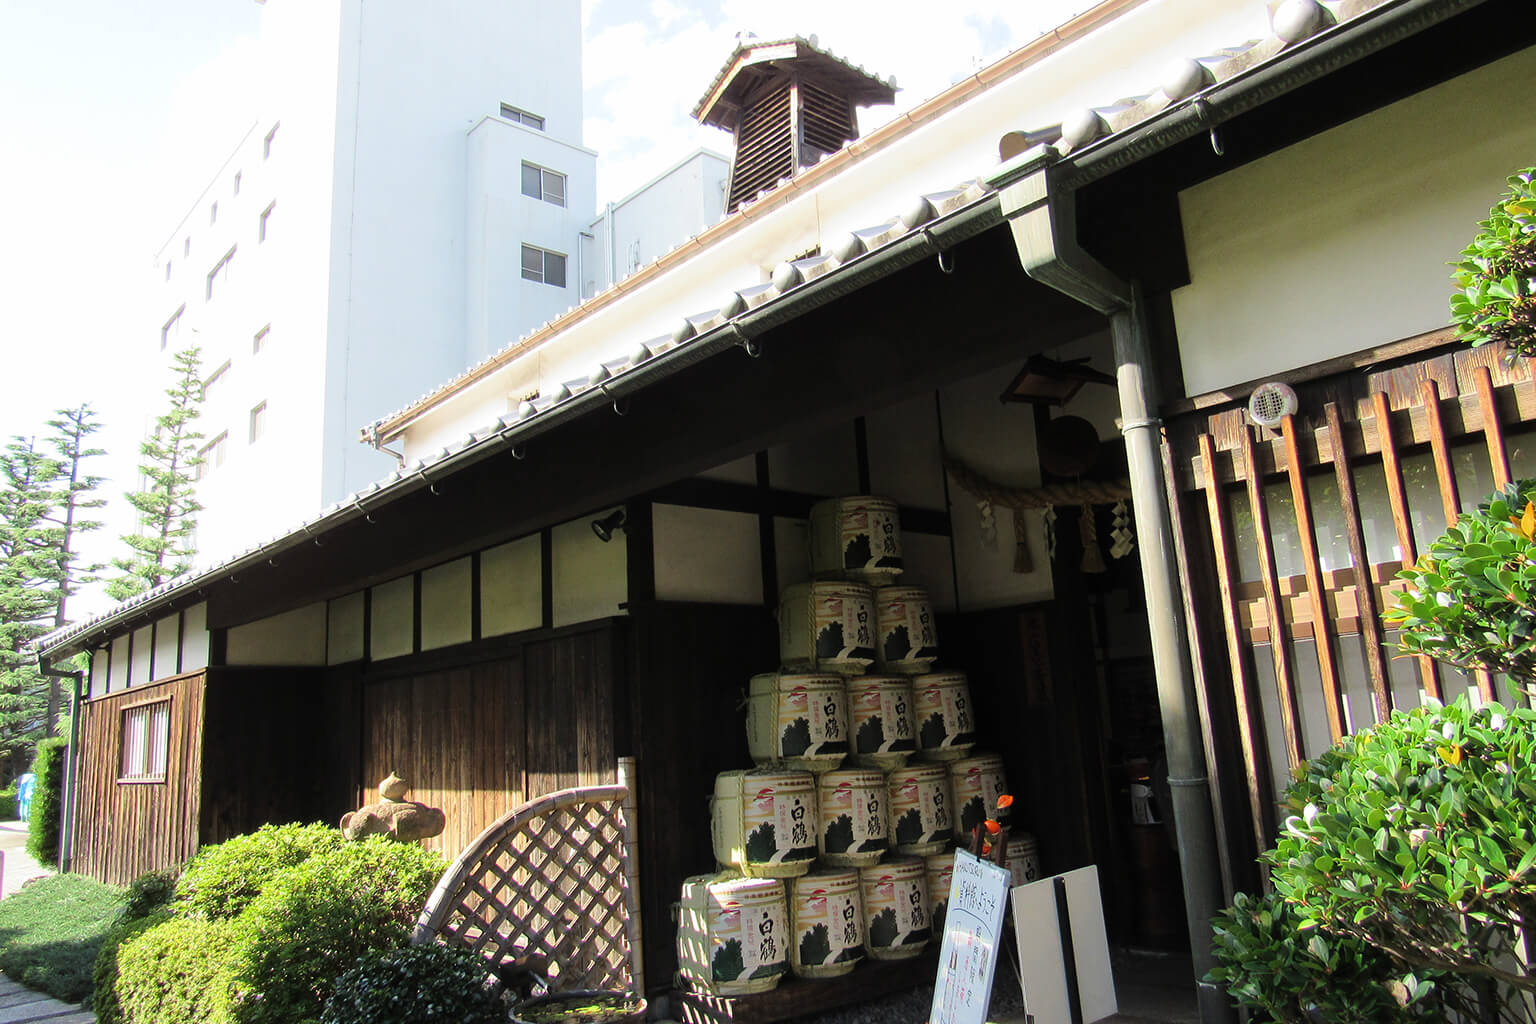 Hakutsuru Brewing Company